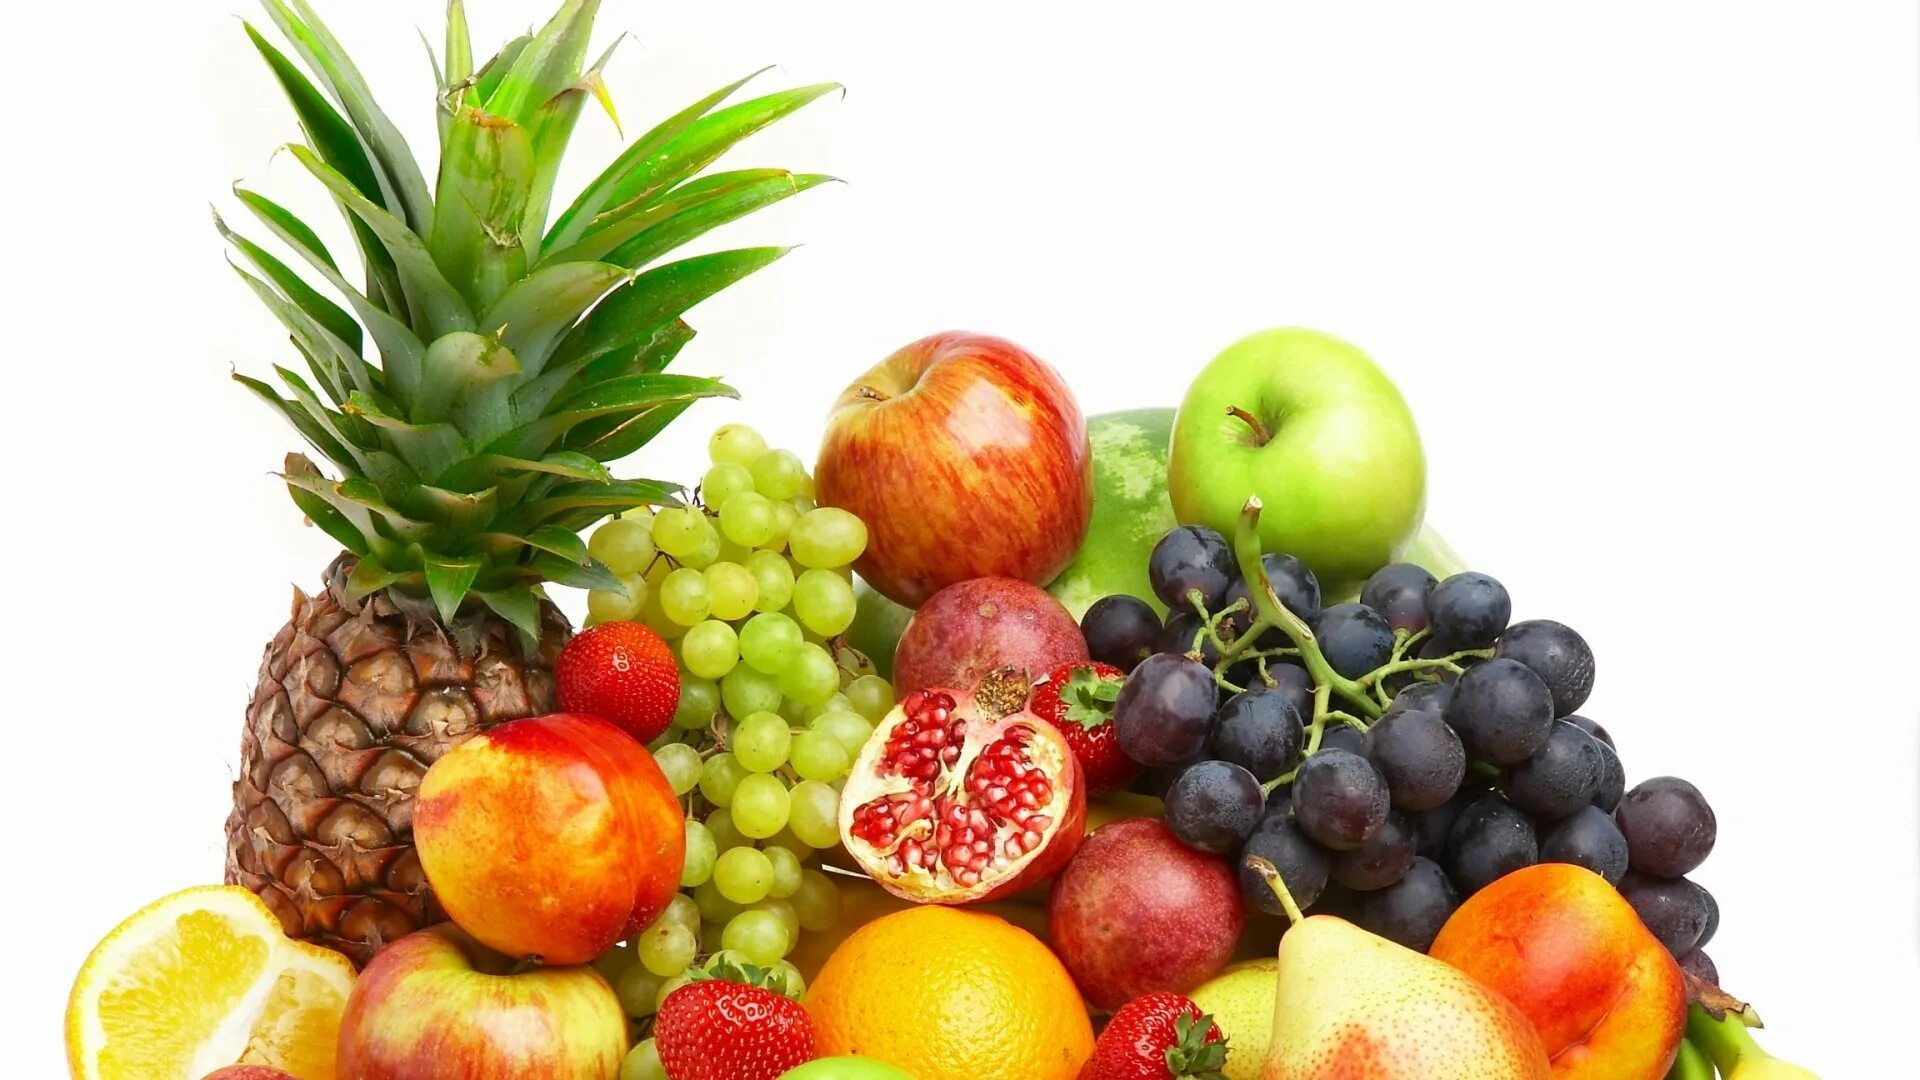 Из 8 кг фруктов. Овощи, фрукты, ягоды. Фрукты. Овощи и фрукты на прозрачном фоне. Фрукты на прозрачном фоне.